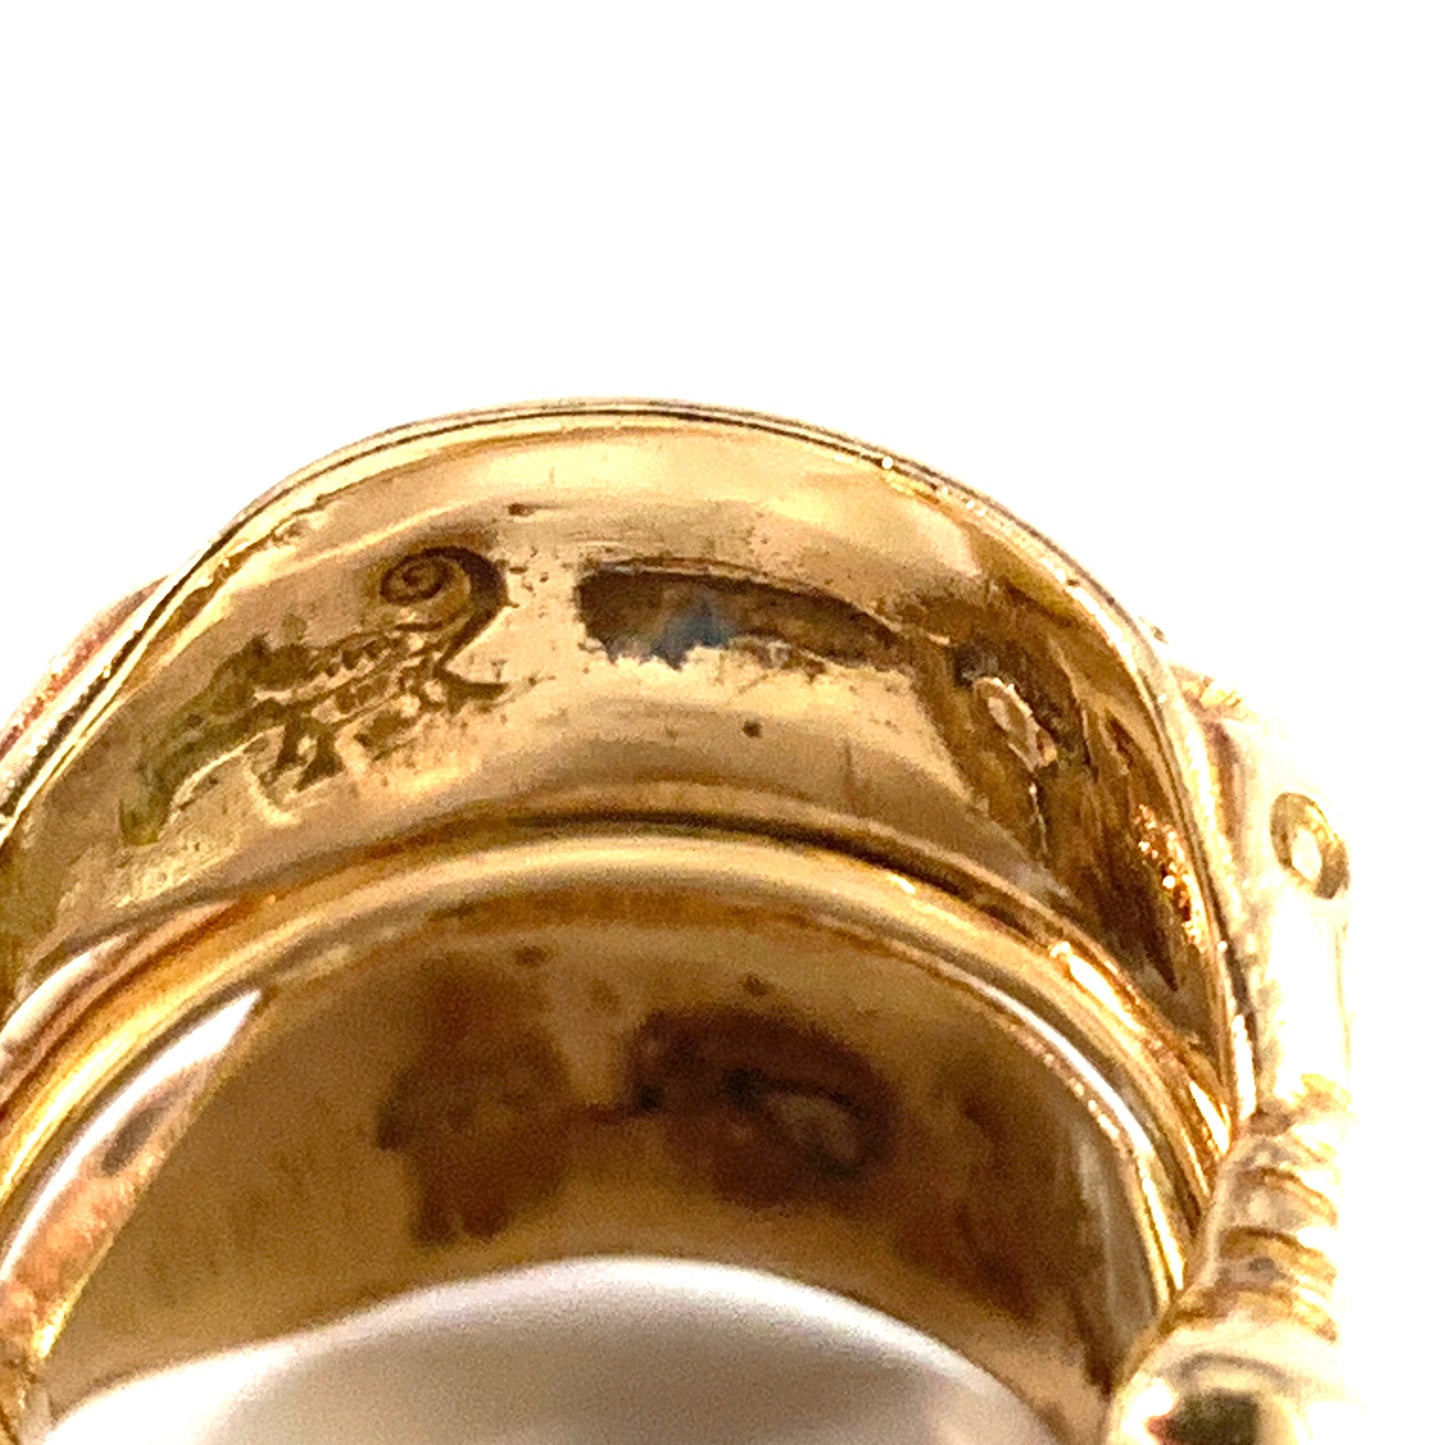 Denmark. Vintage 14k Gold Viking Copy Ring.